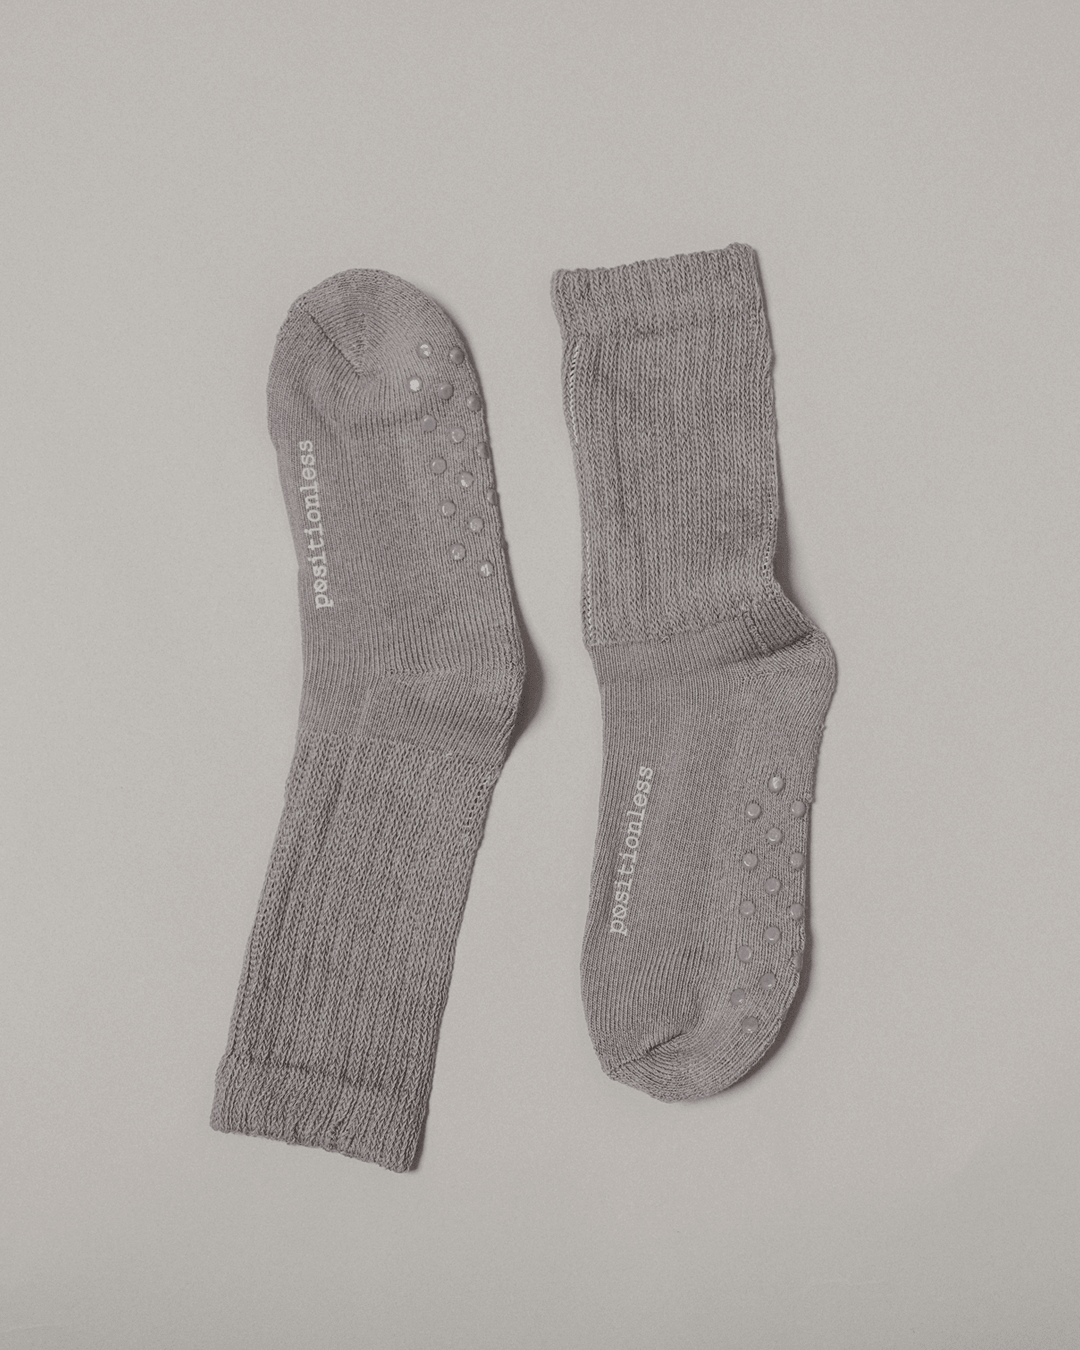 Slouchy Socks - positionless by Kristen Ledlow